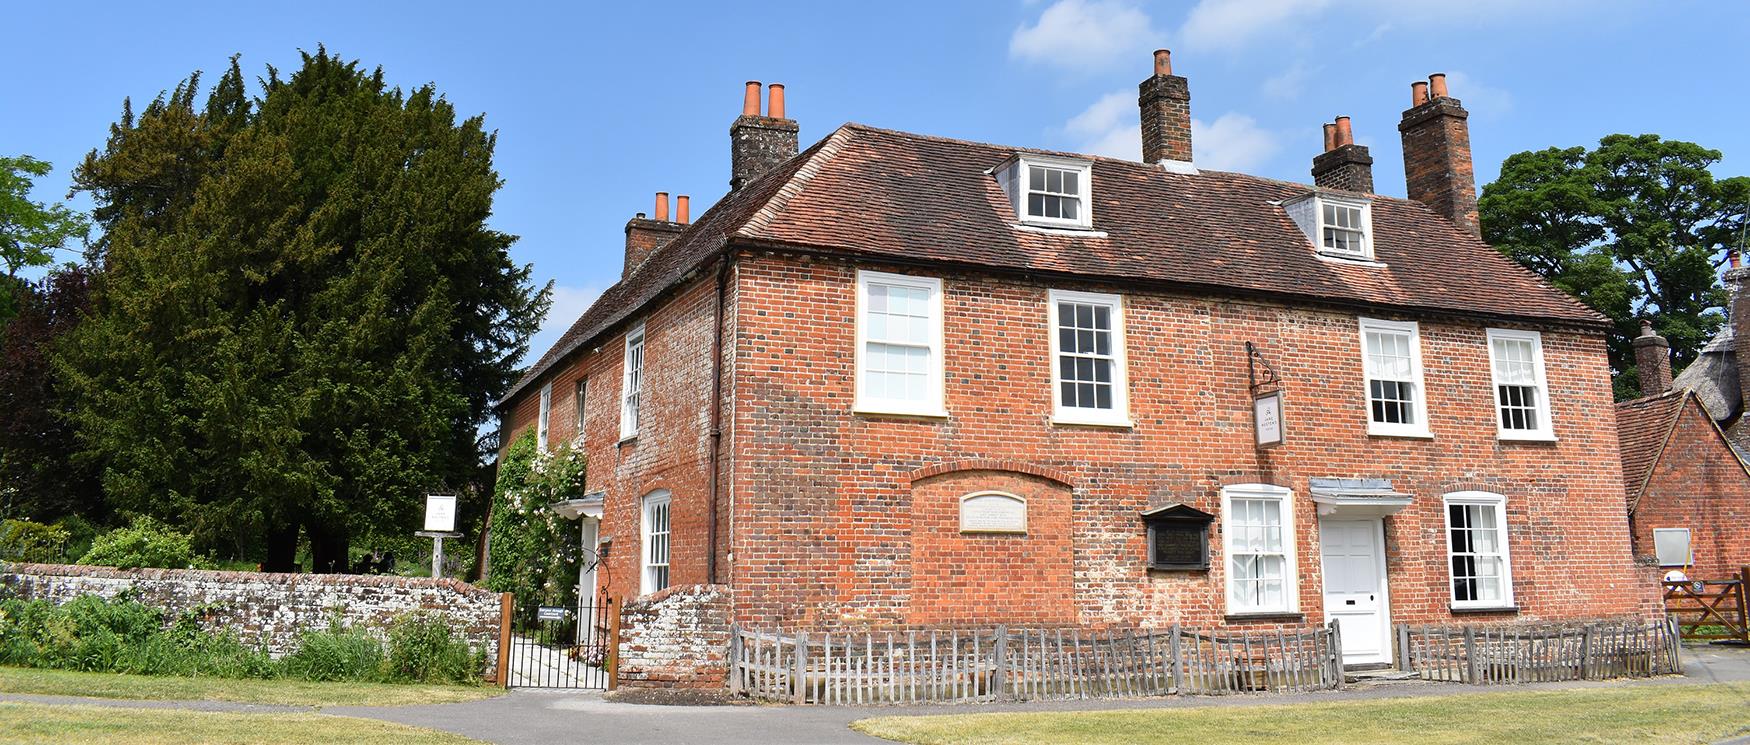 Jane Austen's House, Hampshire